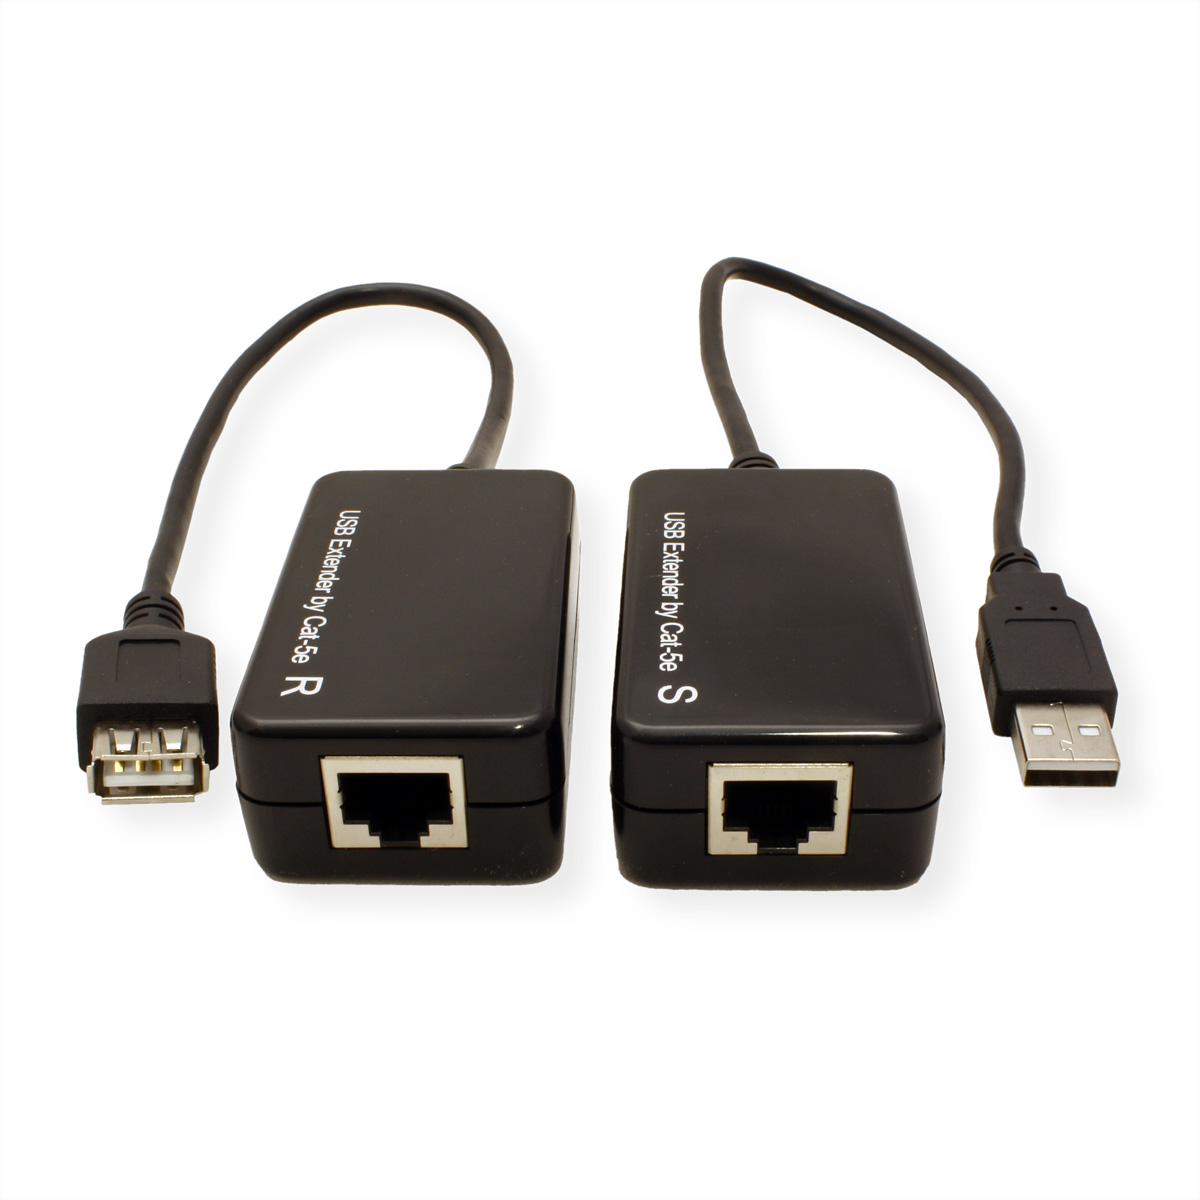 USB-Verlängerung 45m USB VALUE über RJ45, max. 1.1 Verlängerung